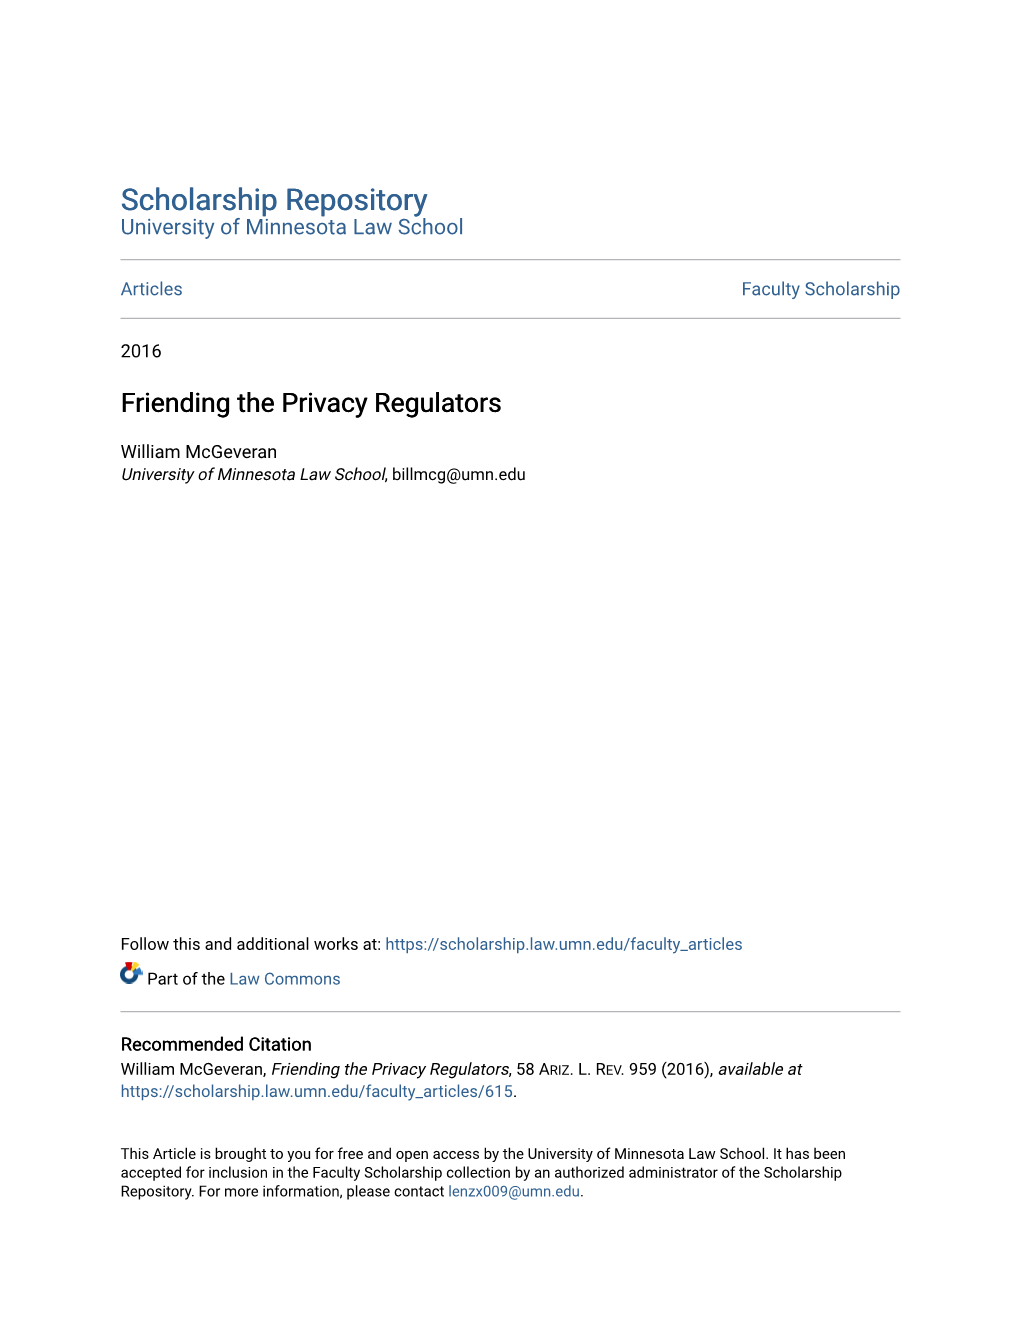 Friending the Privacy Regulators